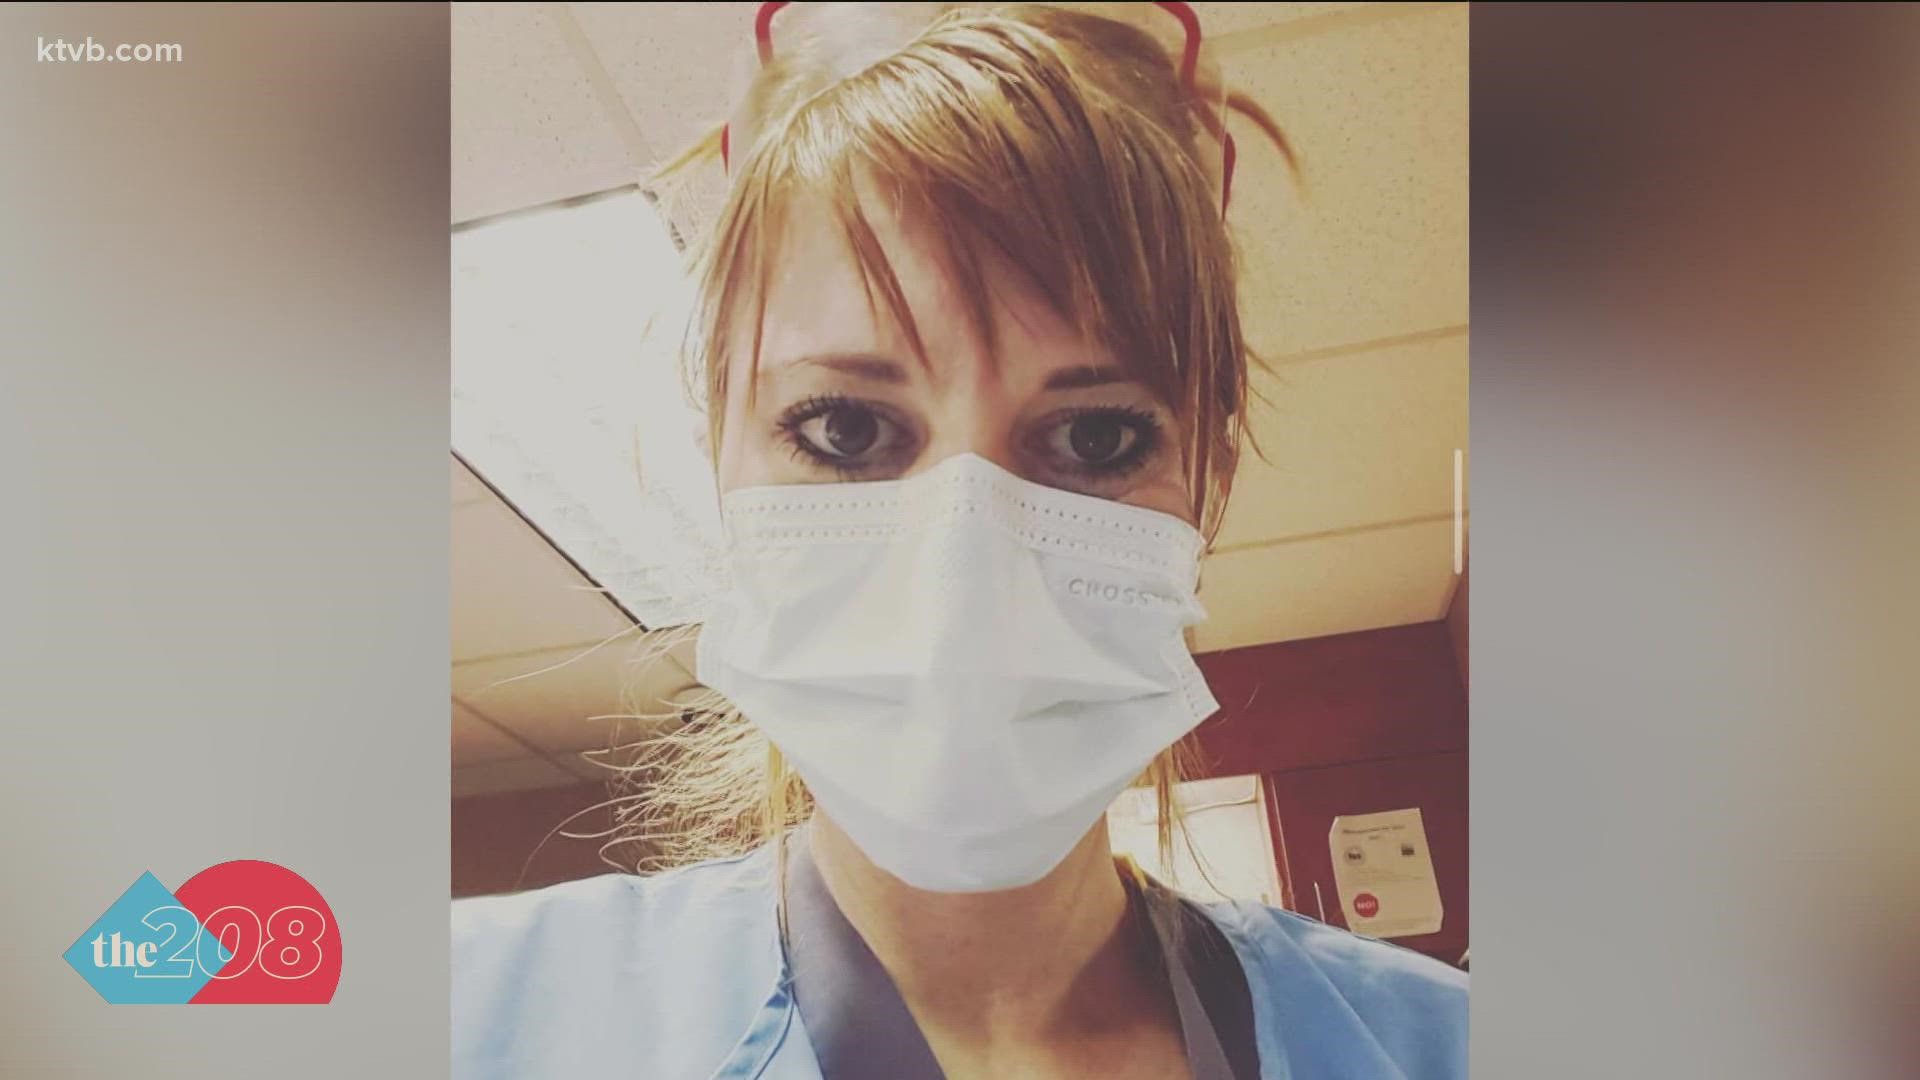 As a cardiac nurse at St. Luke's Health System, Sara McDonald has seen the worst of the COVID-19 pandemic.